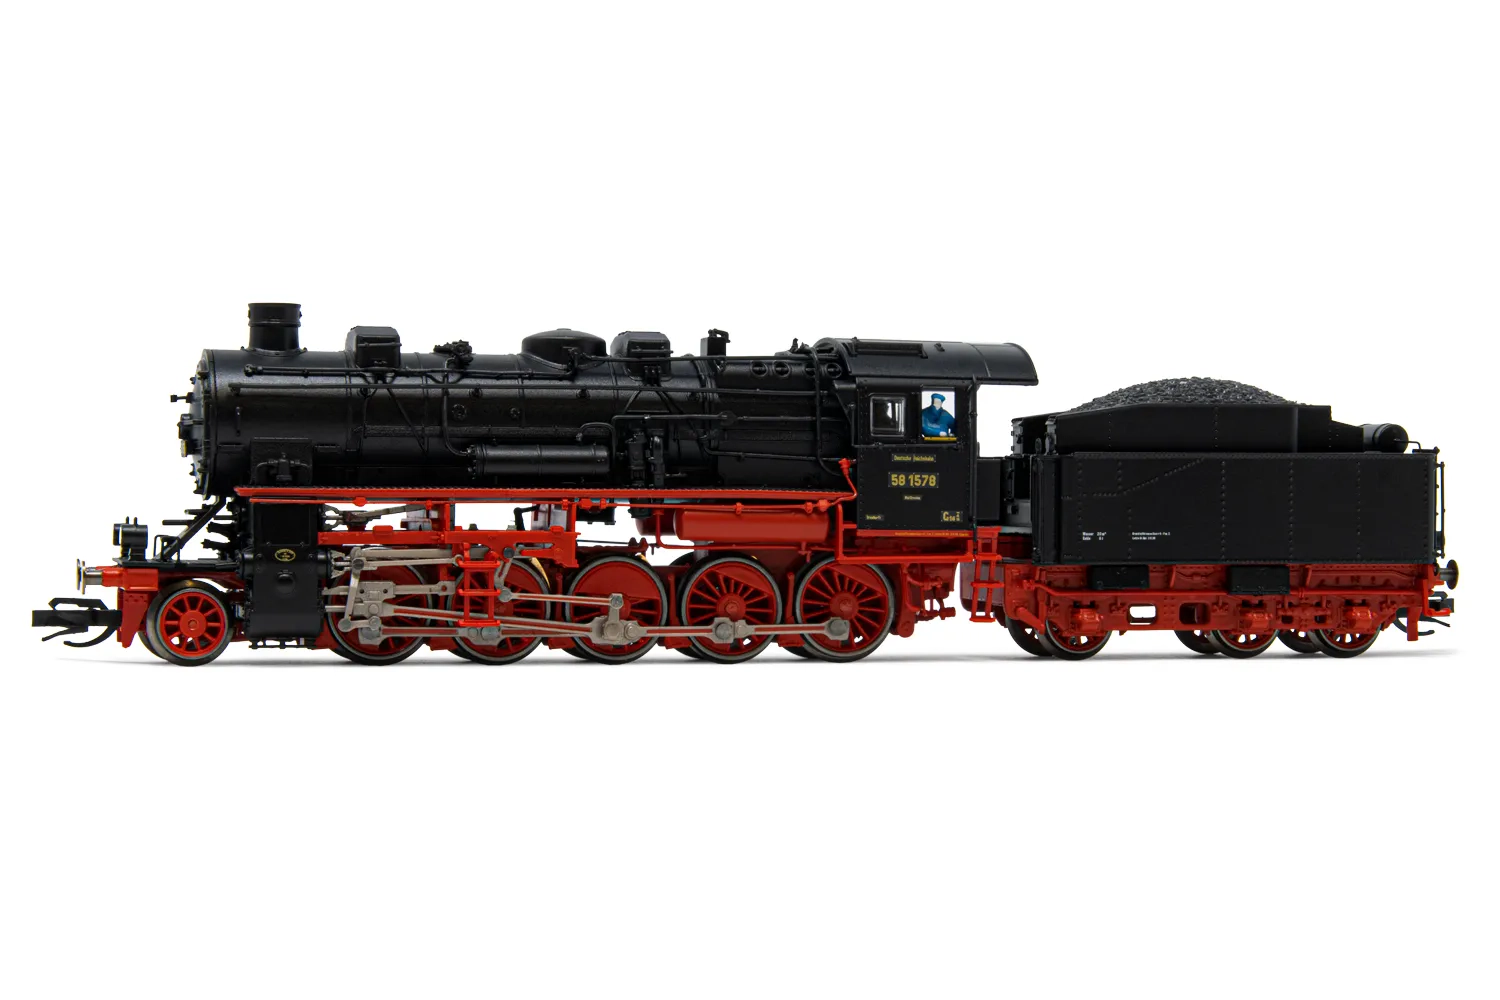 DRG, locomotora a vapor clase 58 1578, decoración roja/negra, ép. II